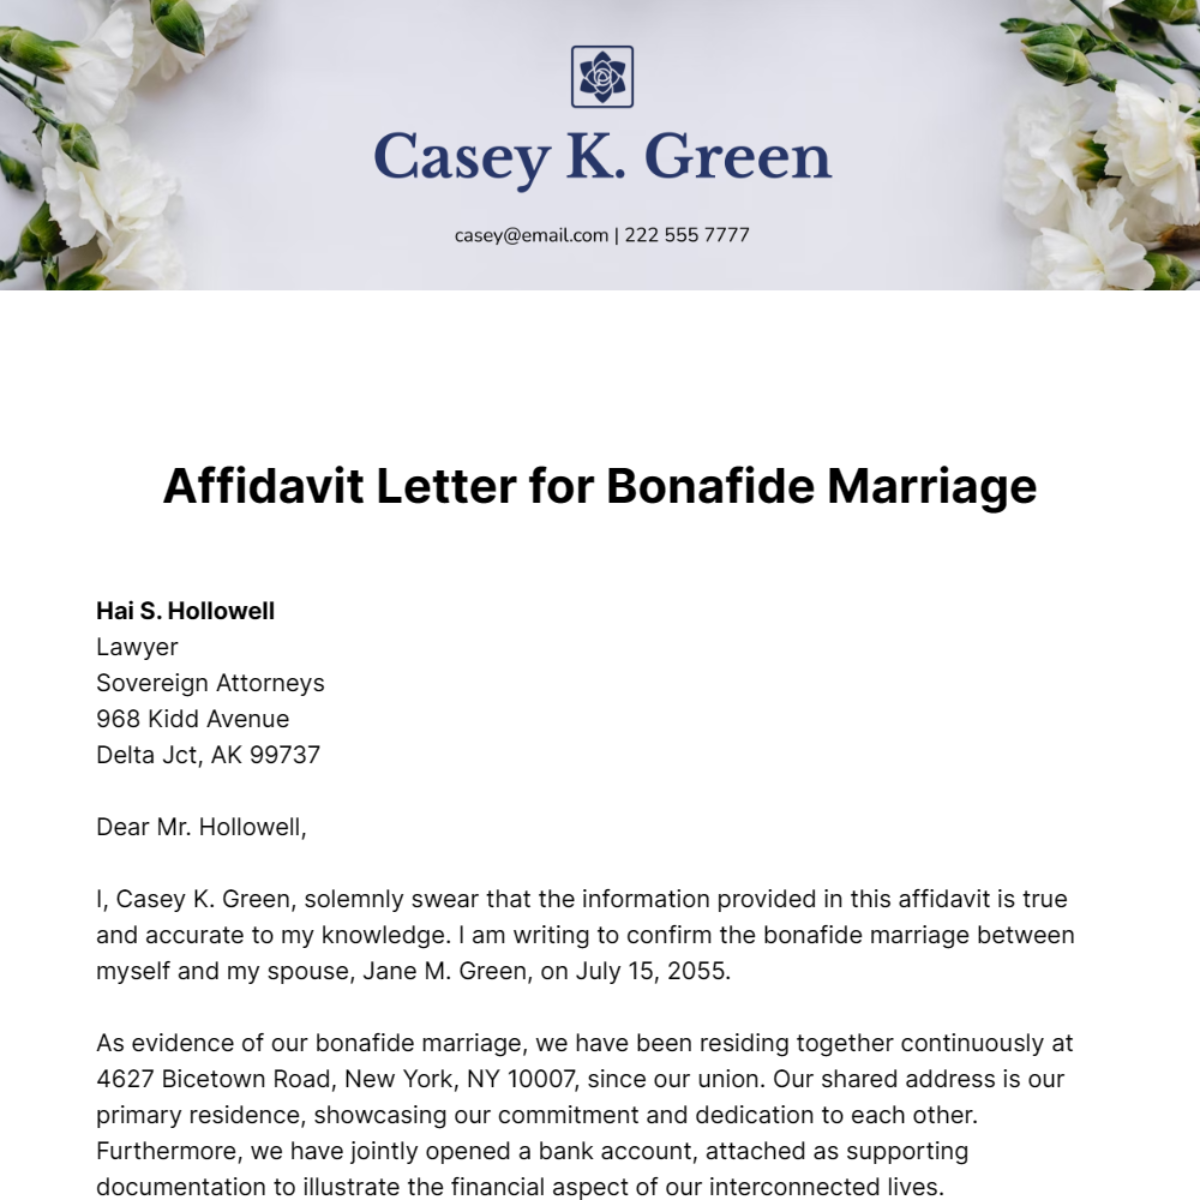 Affidavit Letter for Bonafide Marriage Template